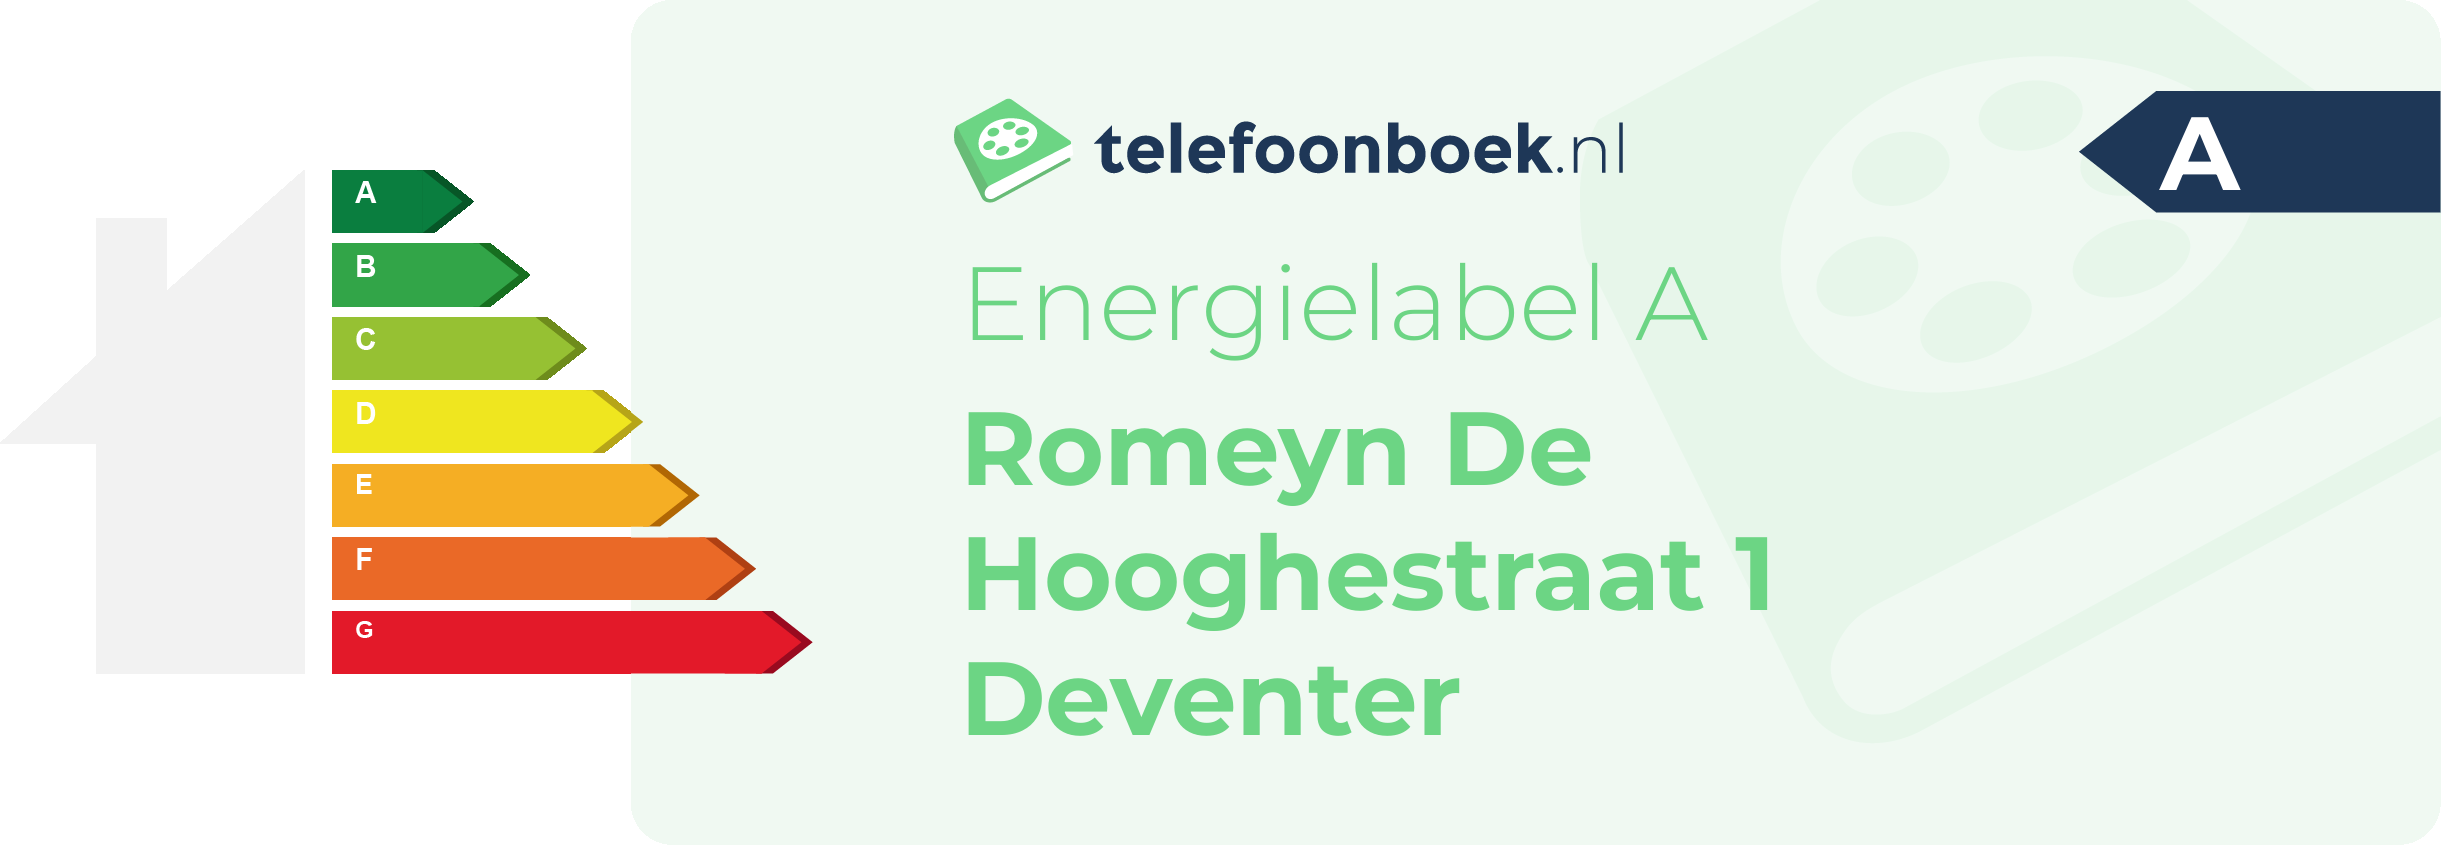 Energielabel Romeyn De Hooghestraat 1 Deventer